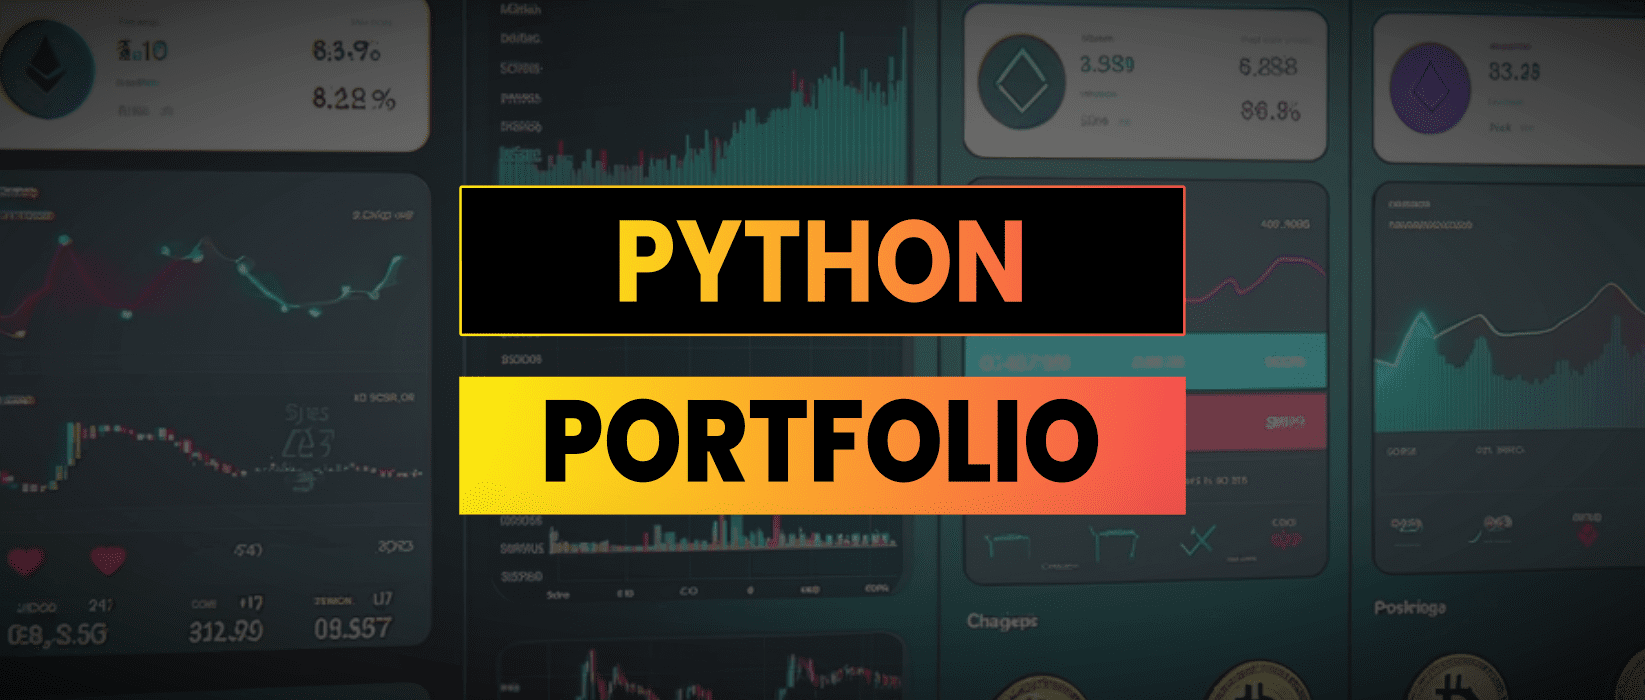 Python Portfolio